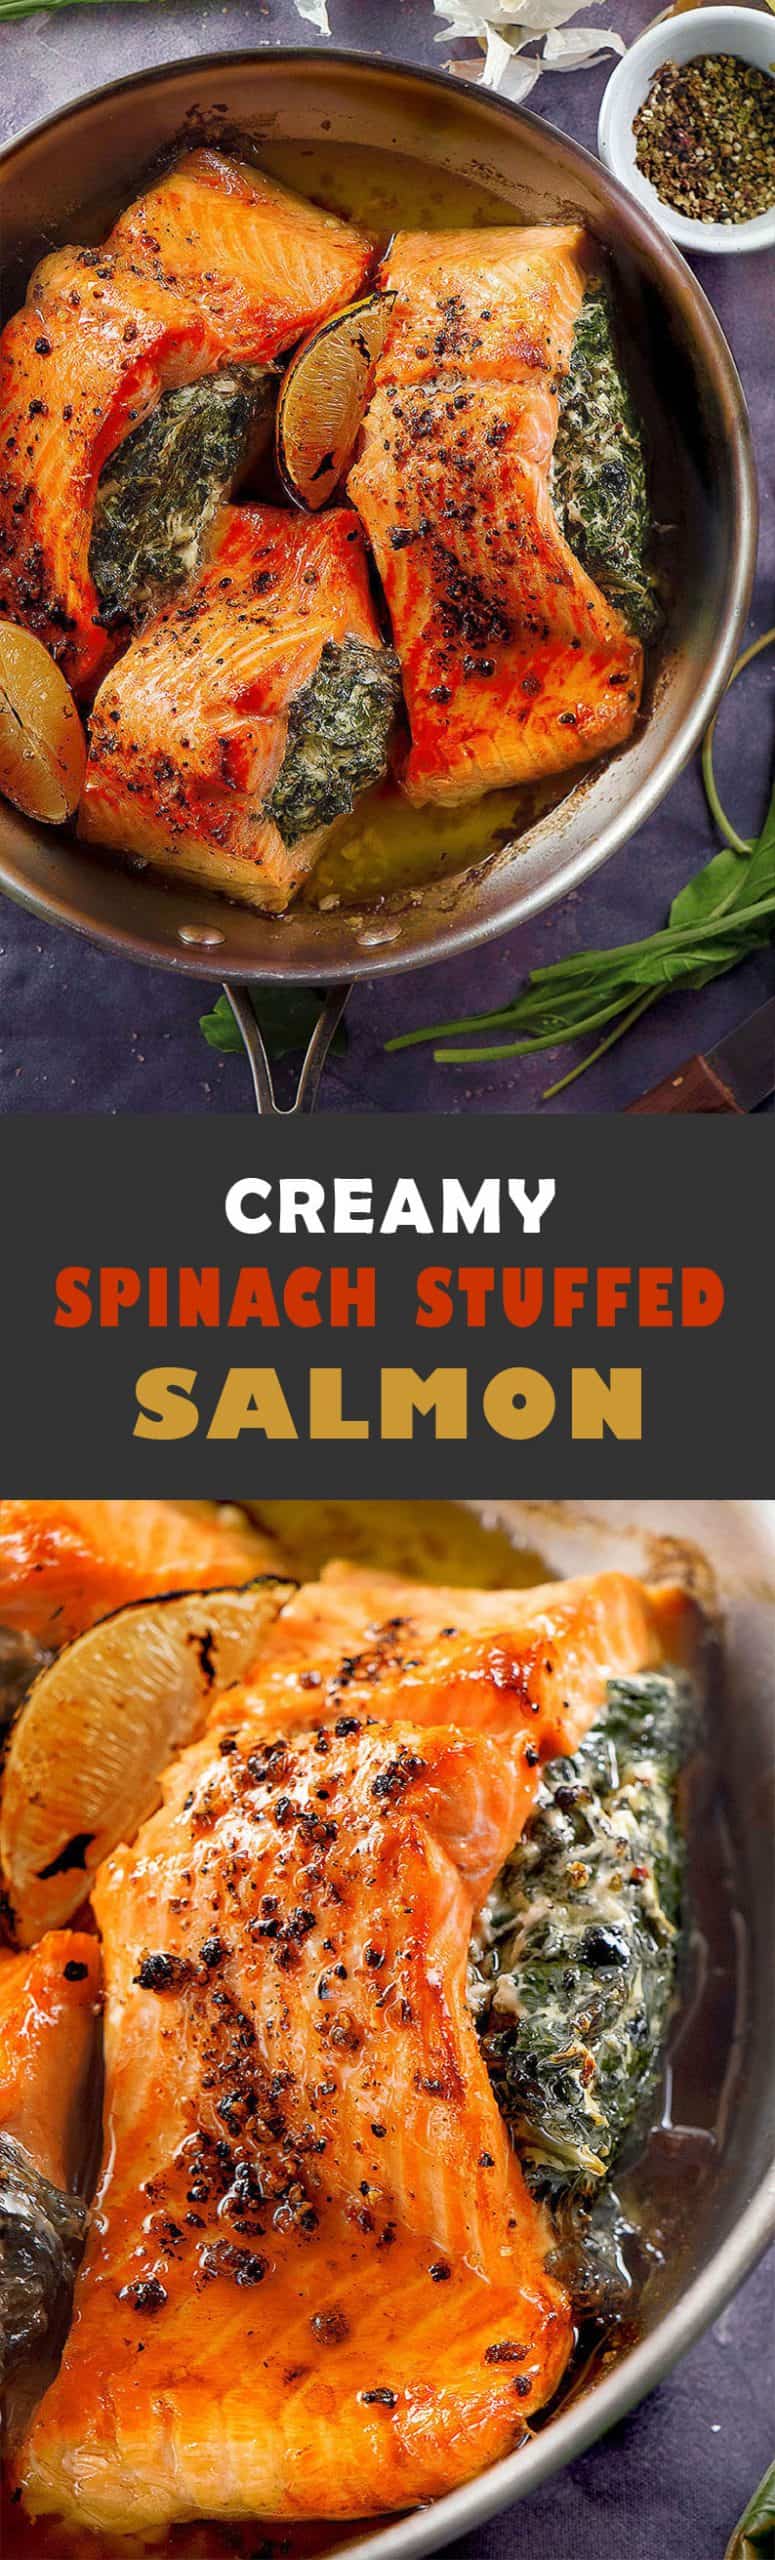 spinach-stuffed-salmon